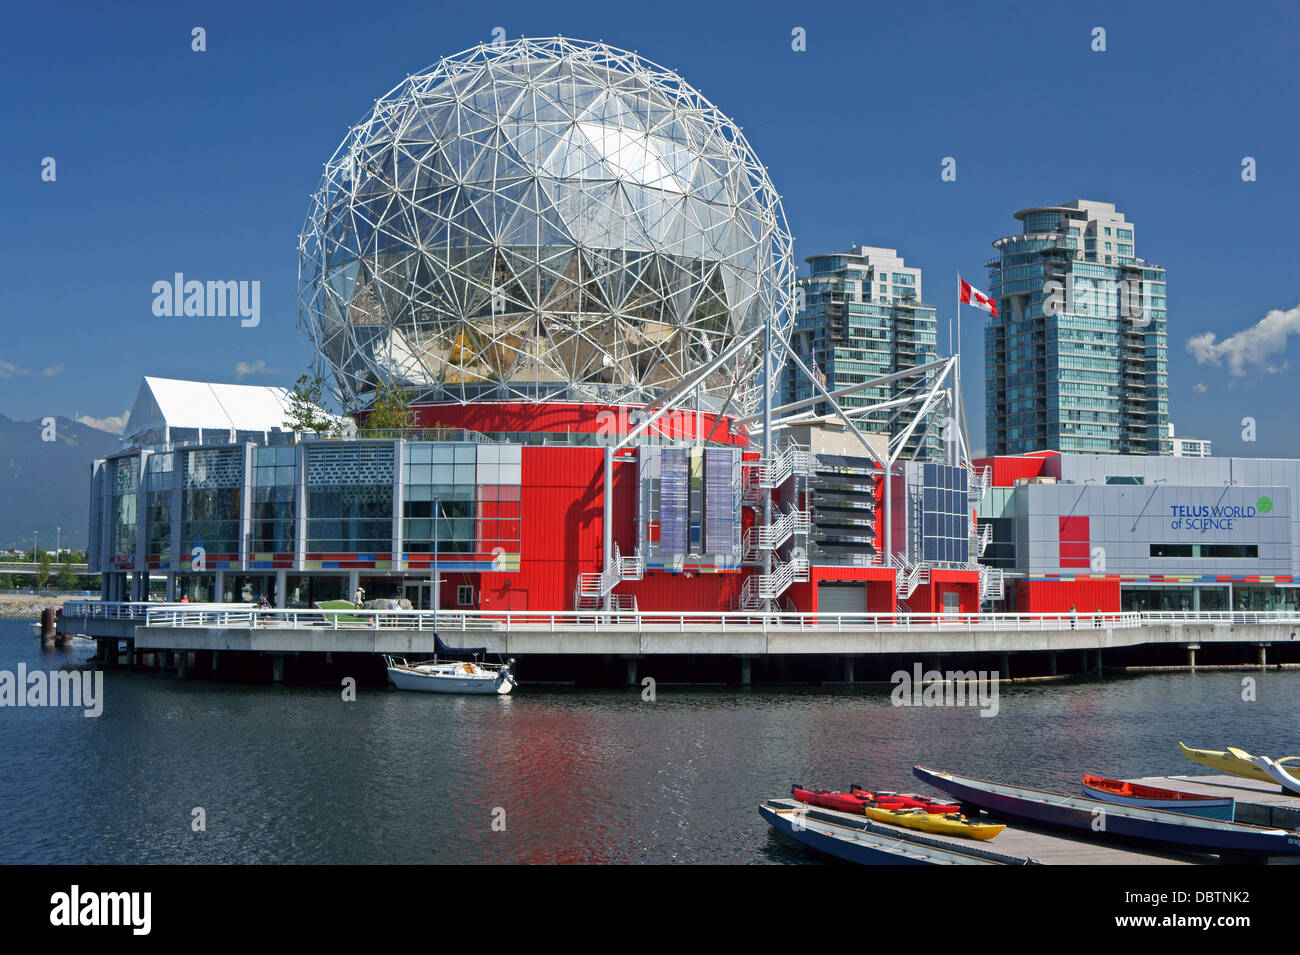 Welt der Wissenschaft oder Telus World of Science am False Creek in Vancouver, BC, Kanada Stockfoto